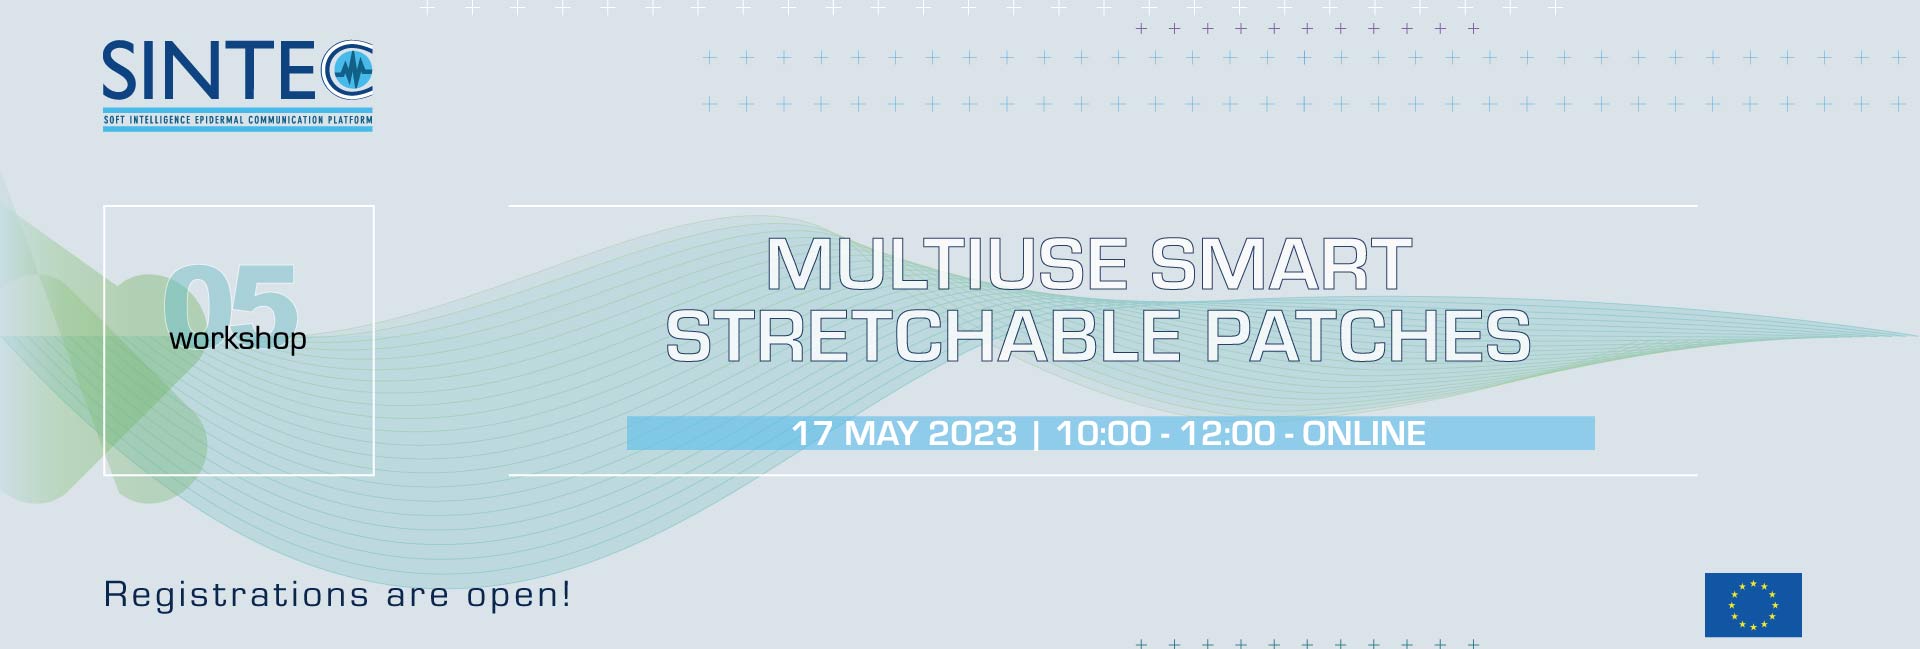 Multiuse-smart-stretchable-patches-sintec-workshop-slider